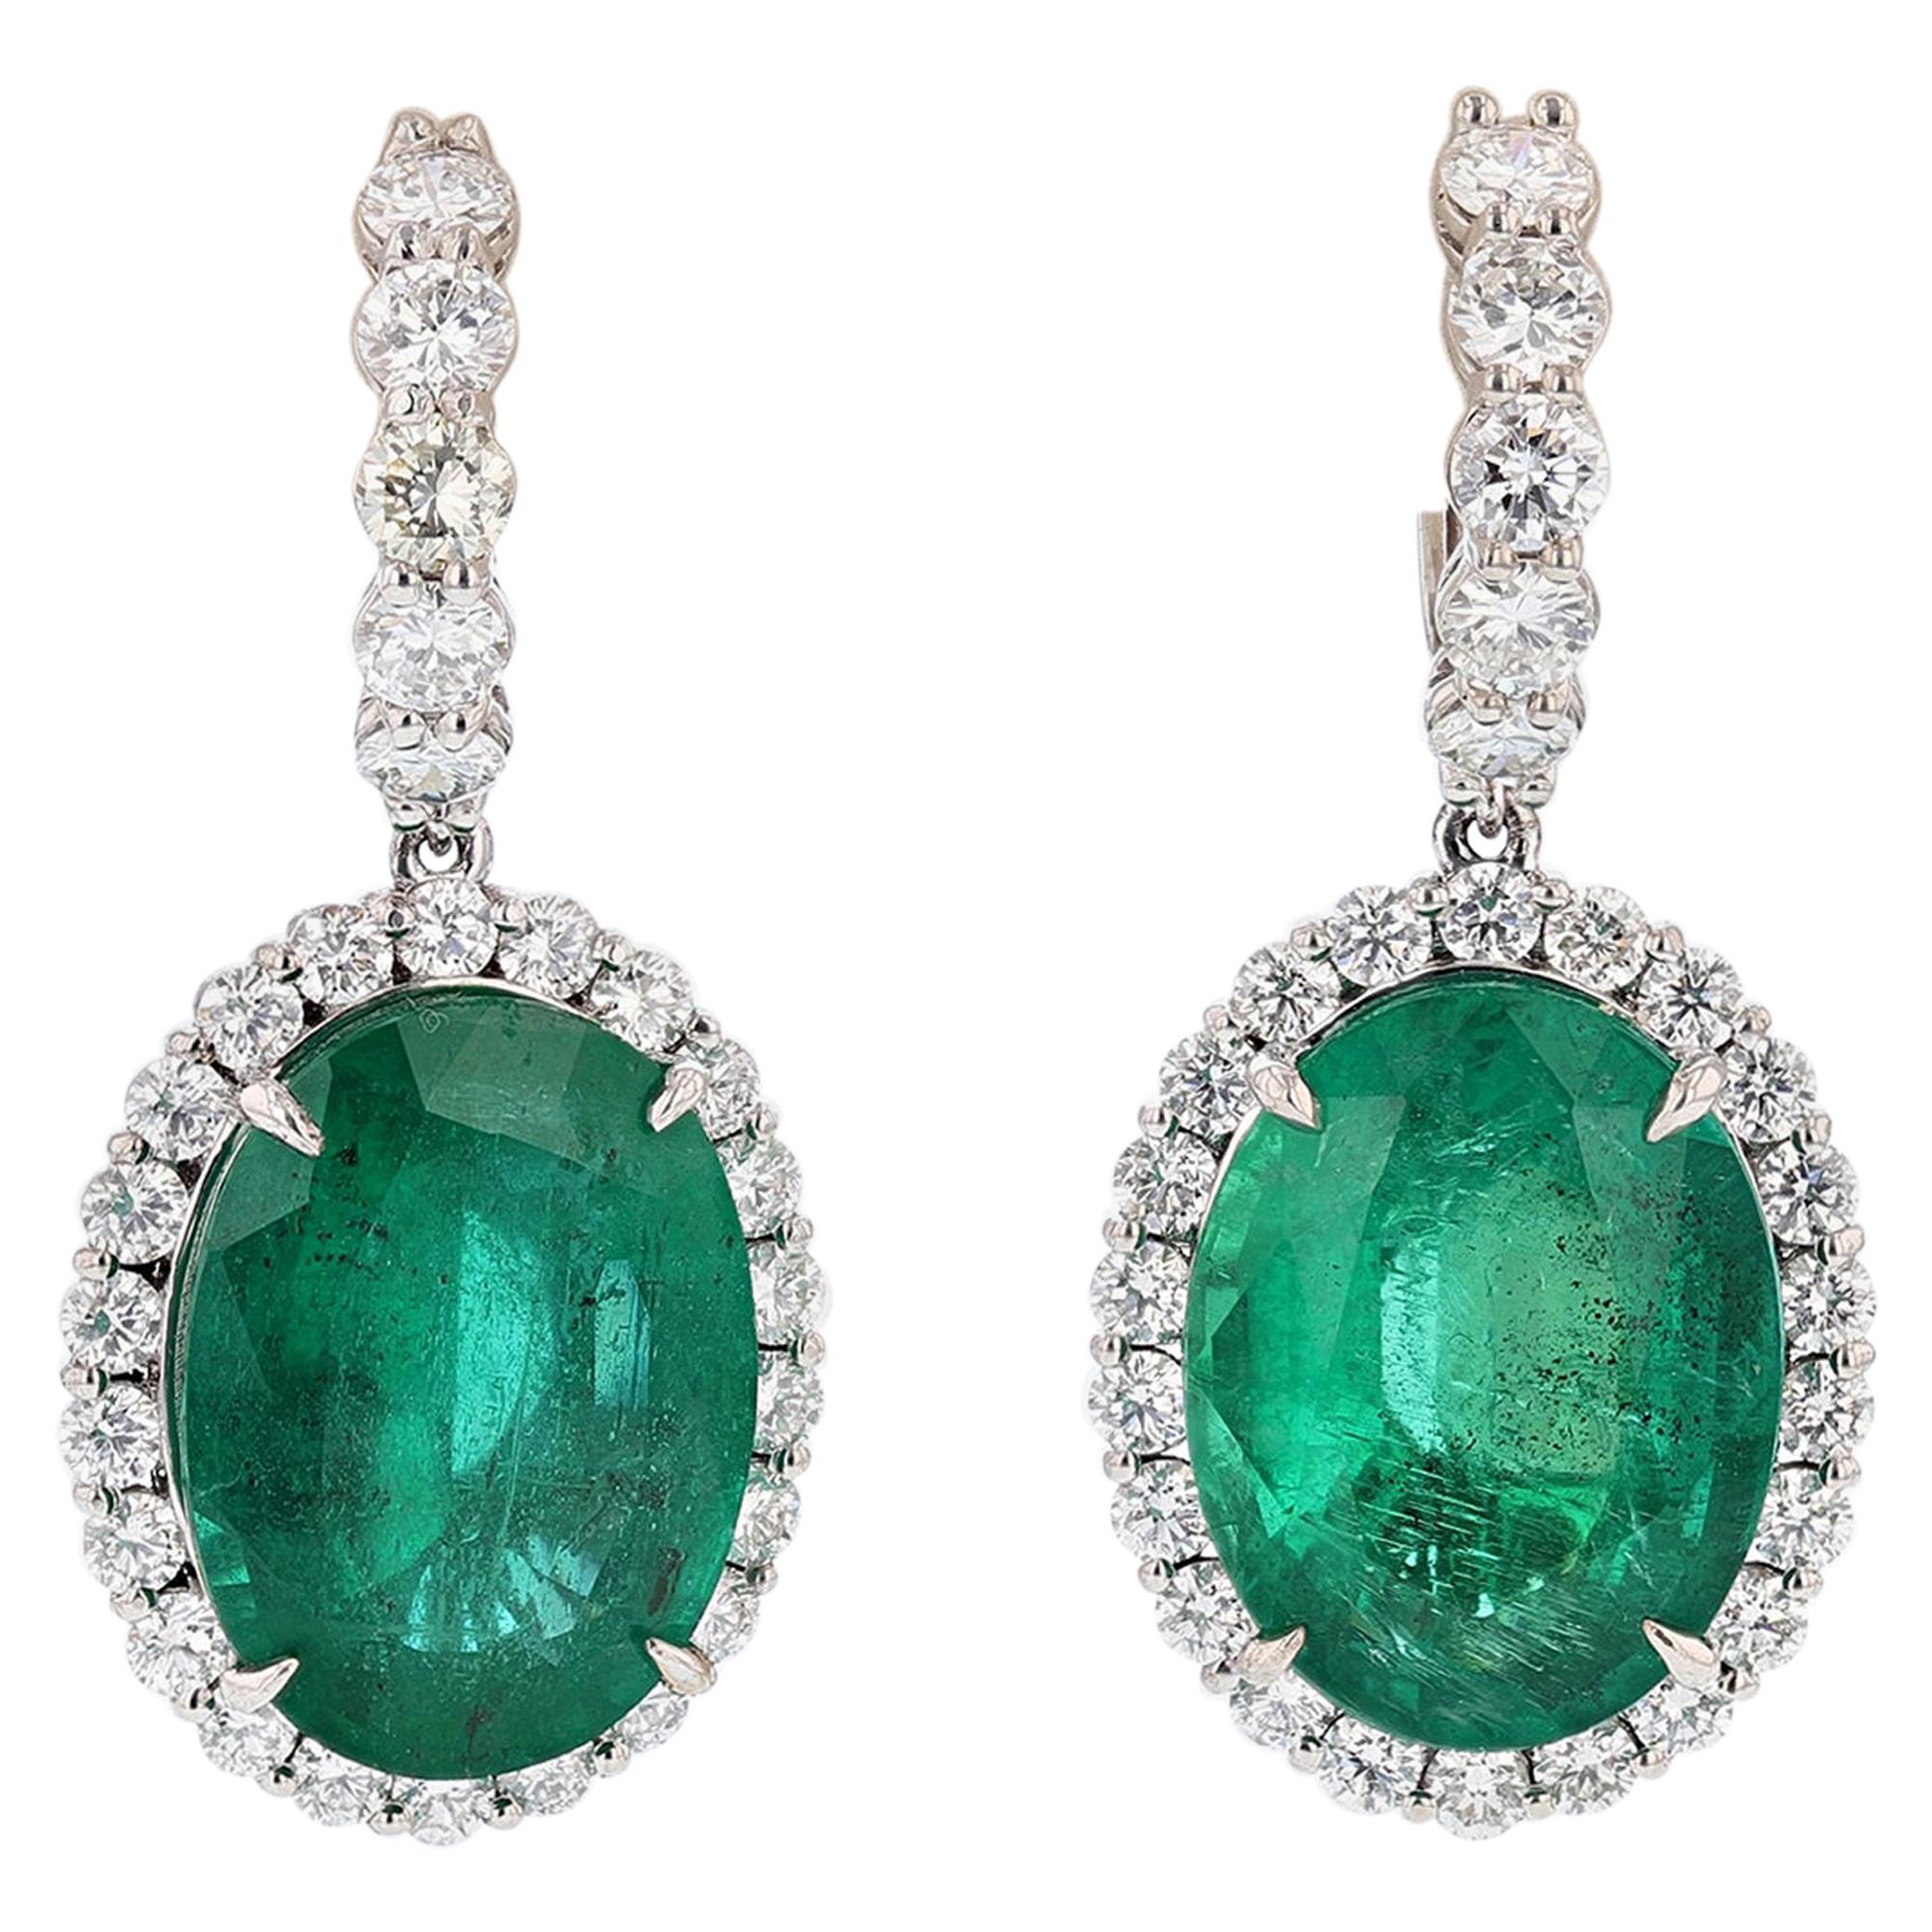 GIA-zertifizierte 24,88 Karat ovale kolumbianische grüne Smaragd- und Diamant-Ohrringe